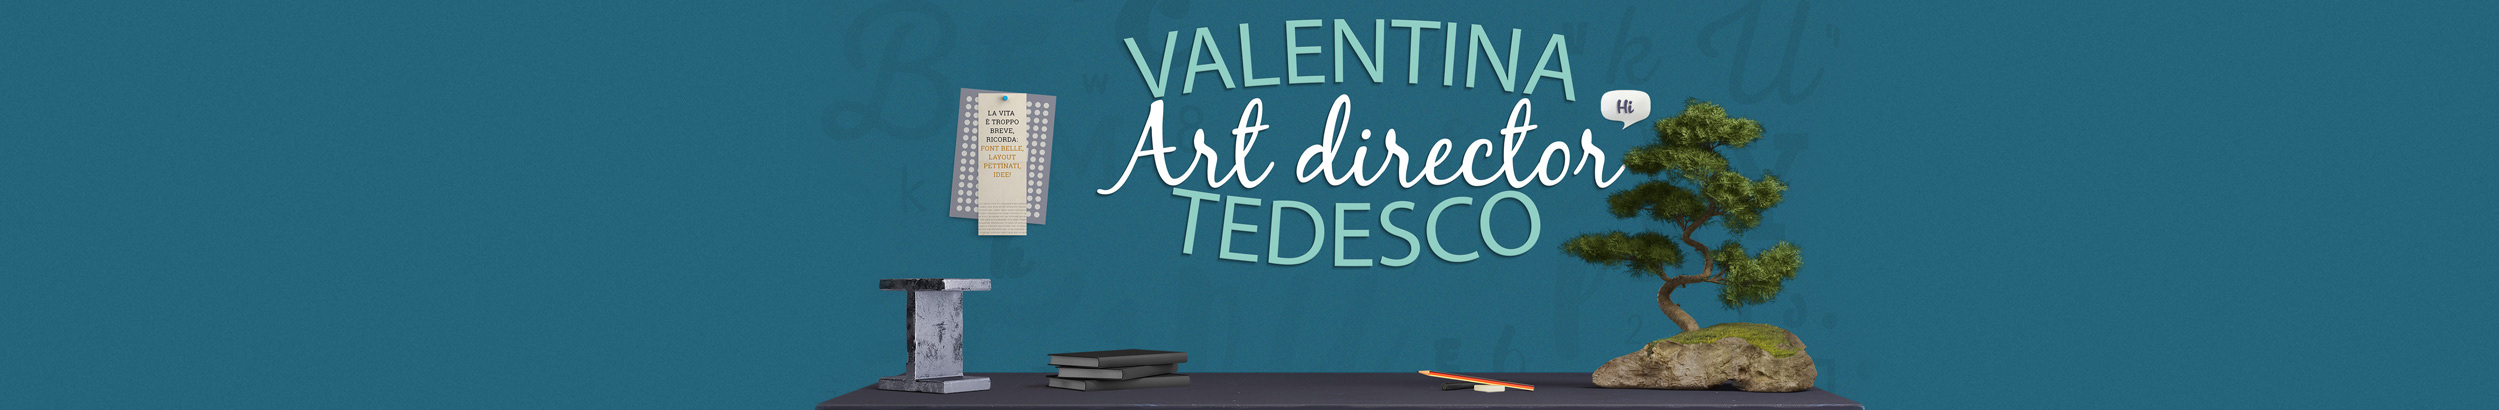 Valentina Tedesco's profile banner